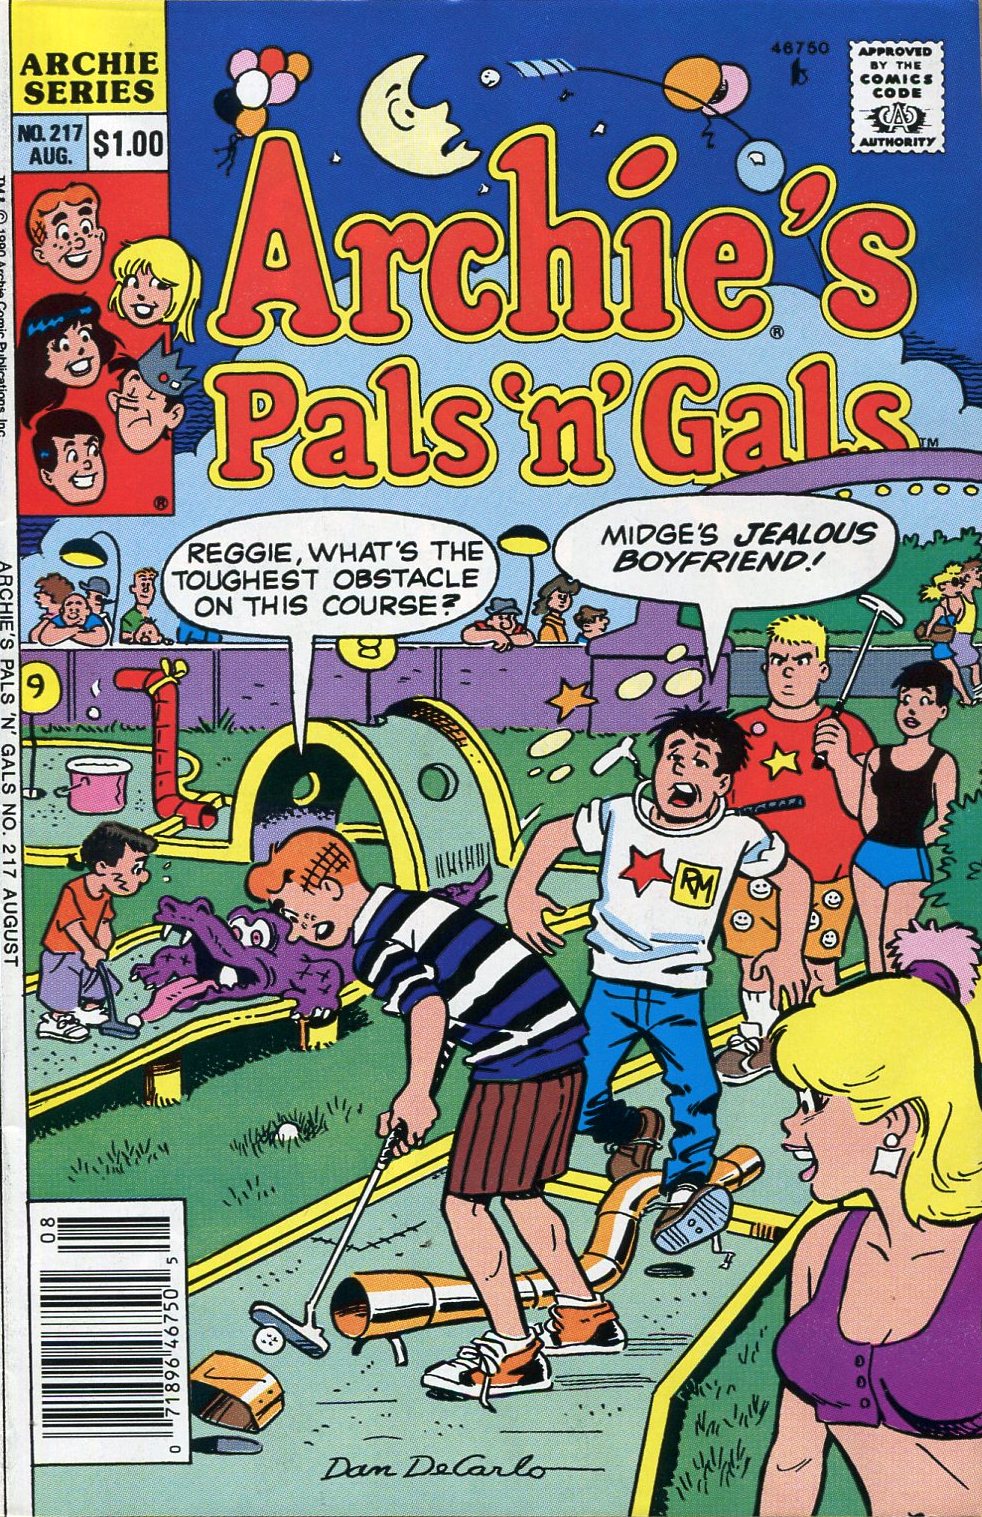 Archie's Pals 'N' Gals 217 Page 1